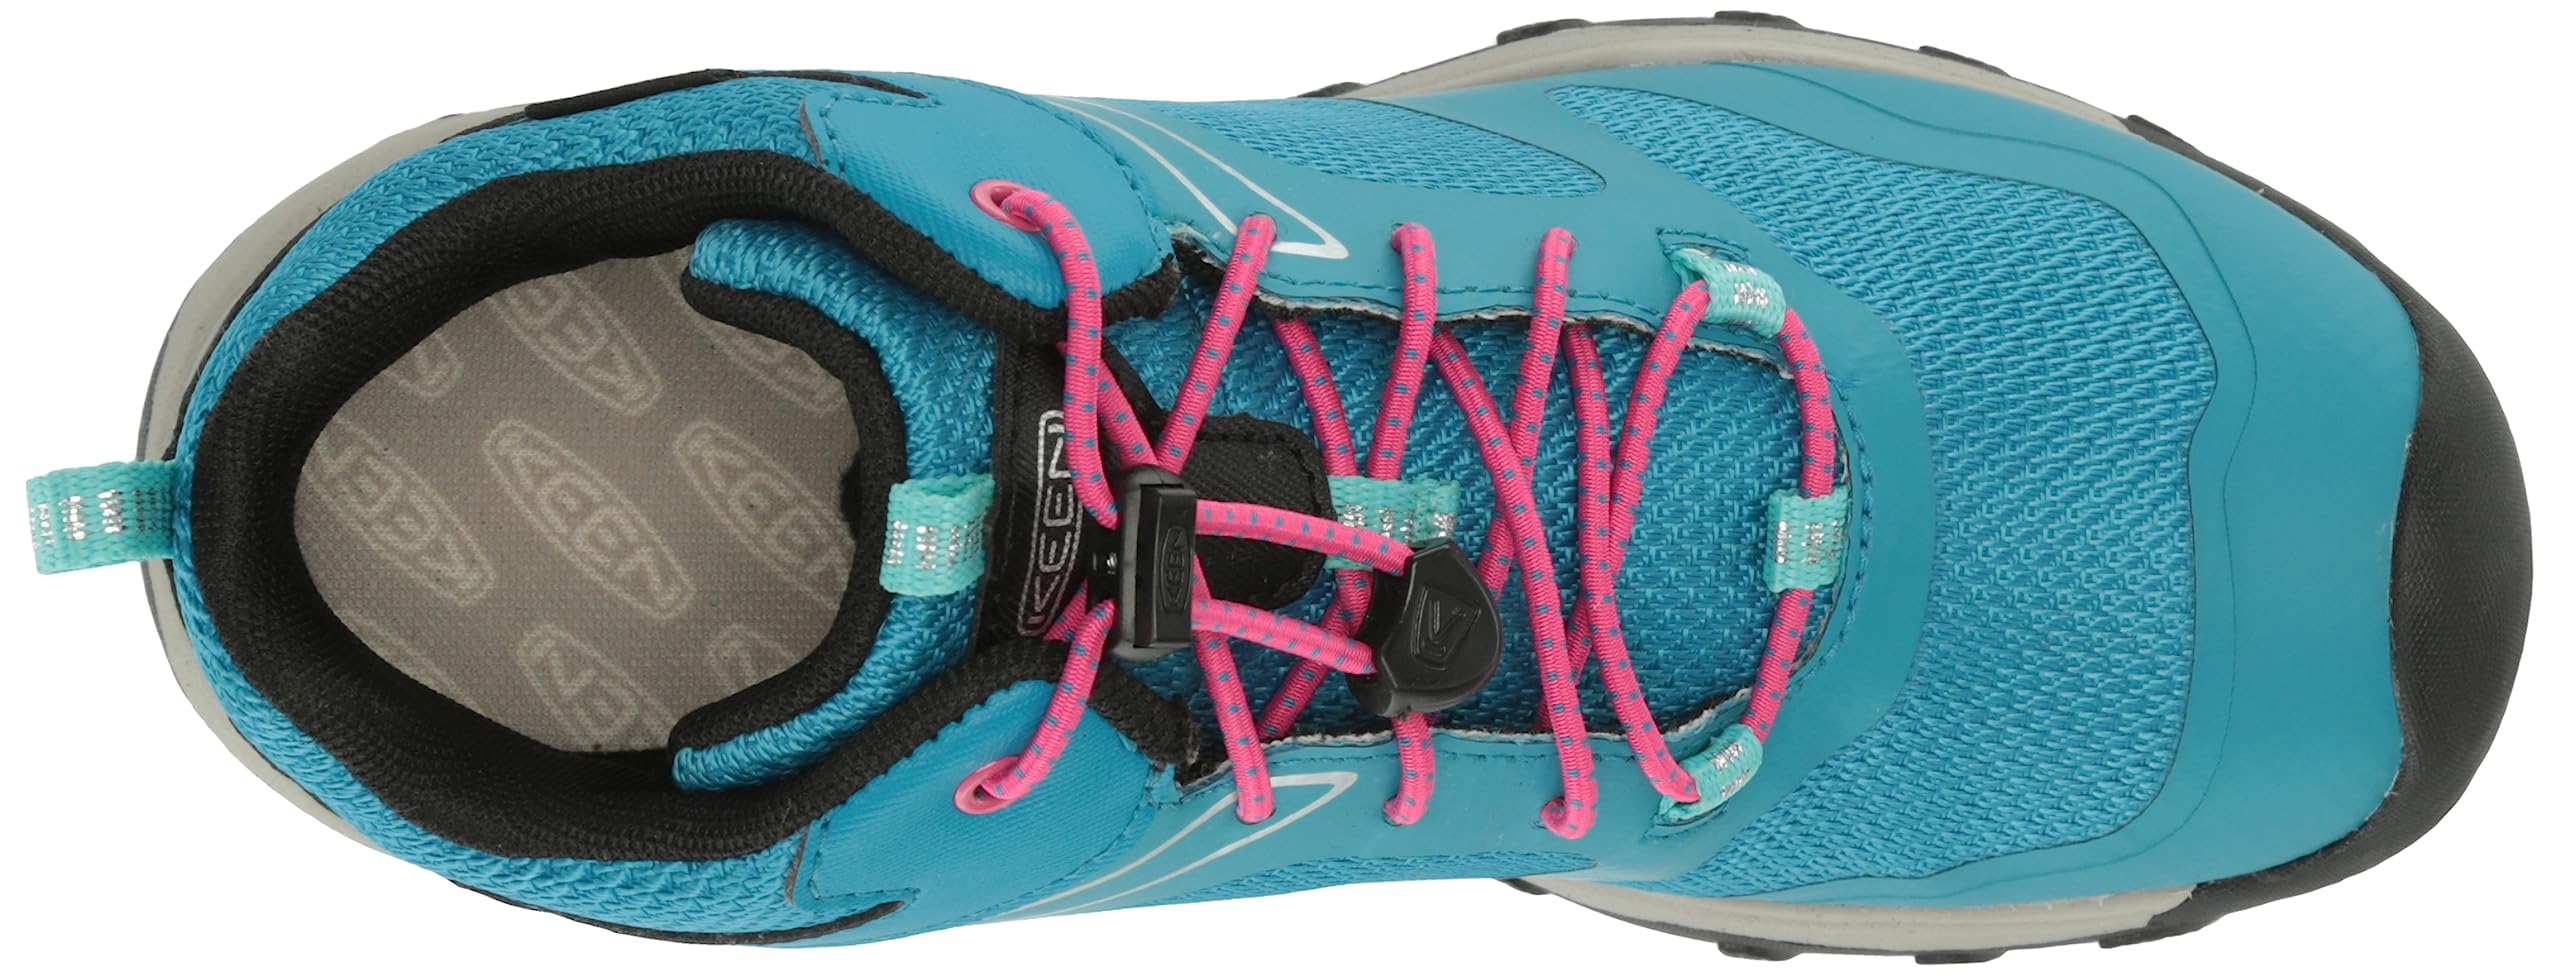 KEEN Unisex-Child Wanduro Mid Height Waterproof Easy on Durable Sneaker Hiking Boots